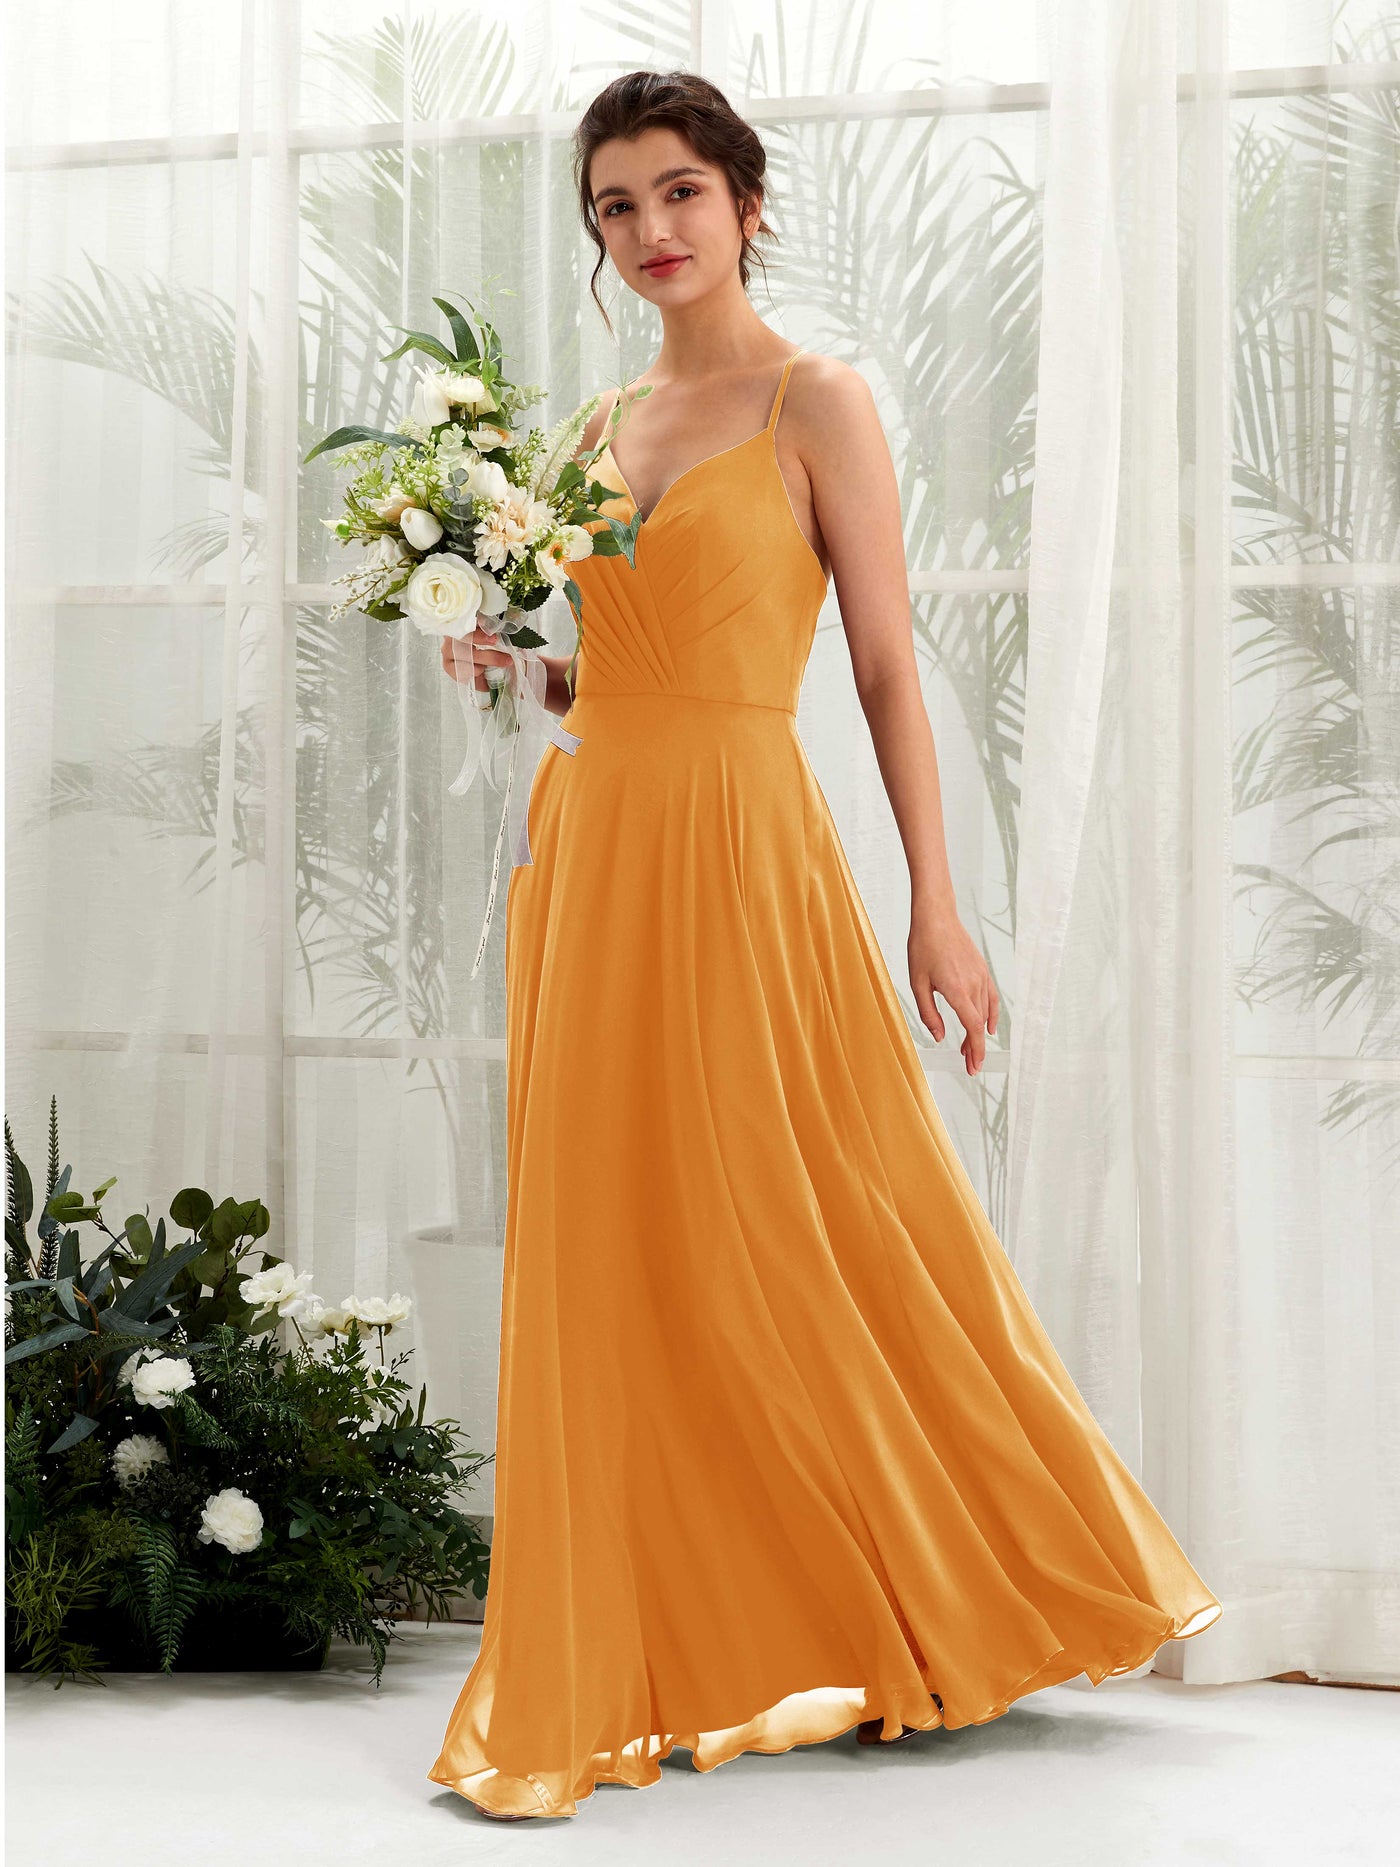 Mango Bridesmaid Dresses Bridesmaid Dress Chiffon Spaghetti-straps Full Length Sleeveless Wedding Party Dress (81224202)#color_mango